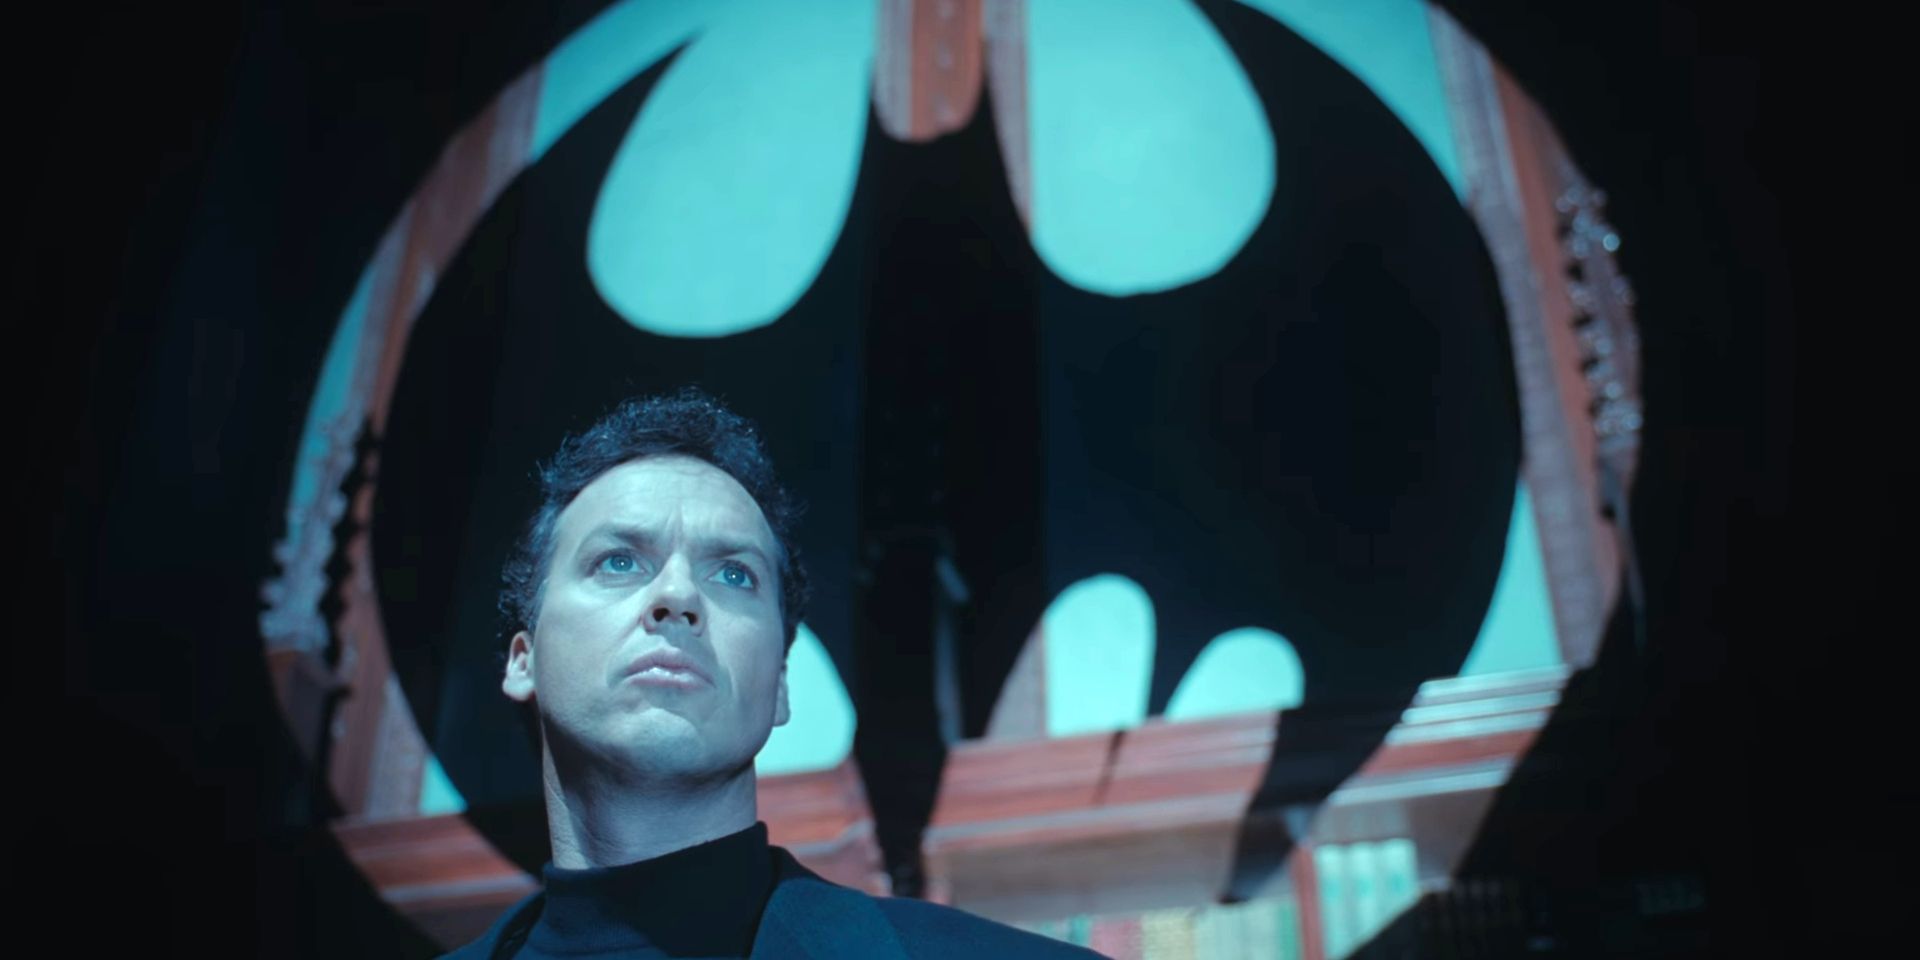 Bruce Wayne stands in front of the Bat Signal in Batman Returns